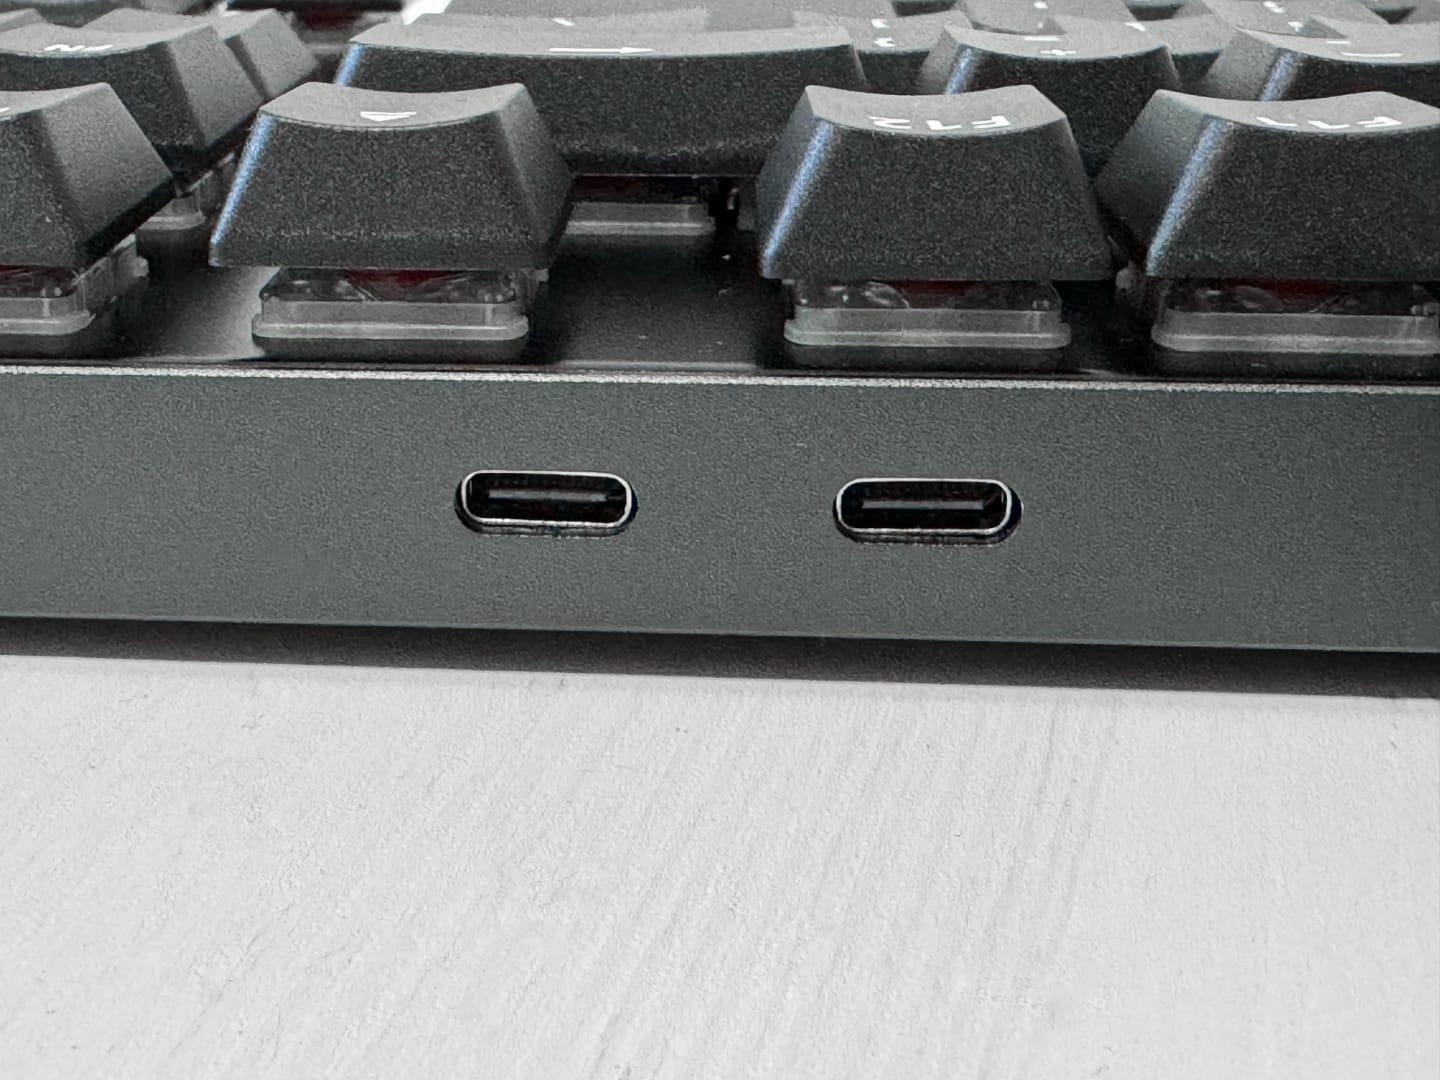 dasKeyboard MacTigr - mechanical keyboard for Mac users